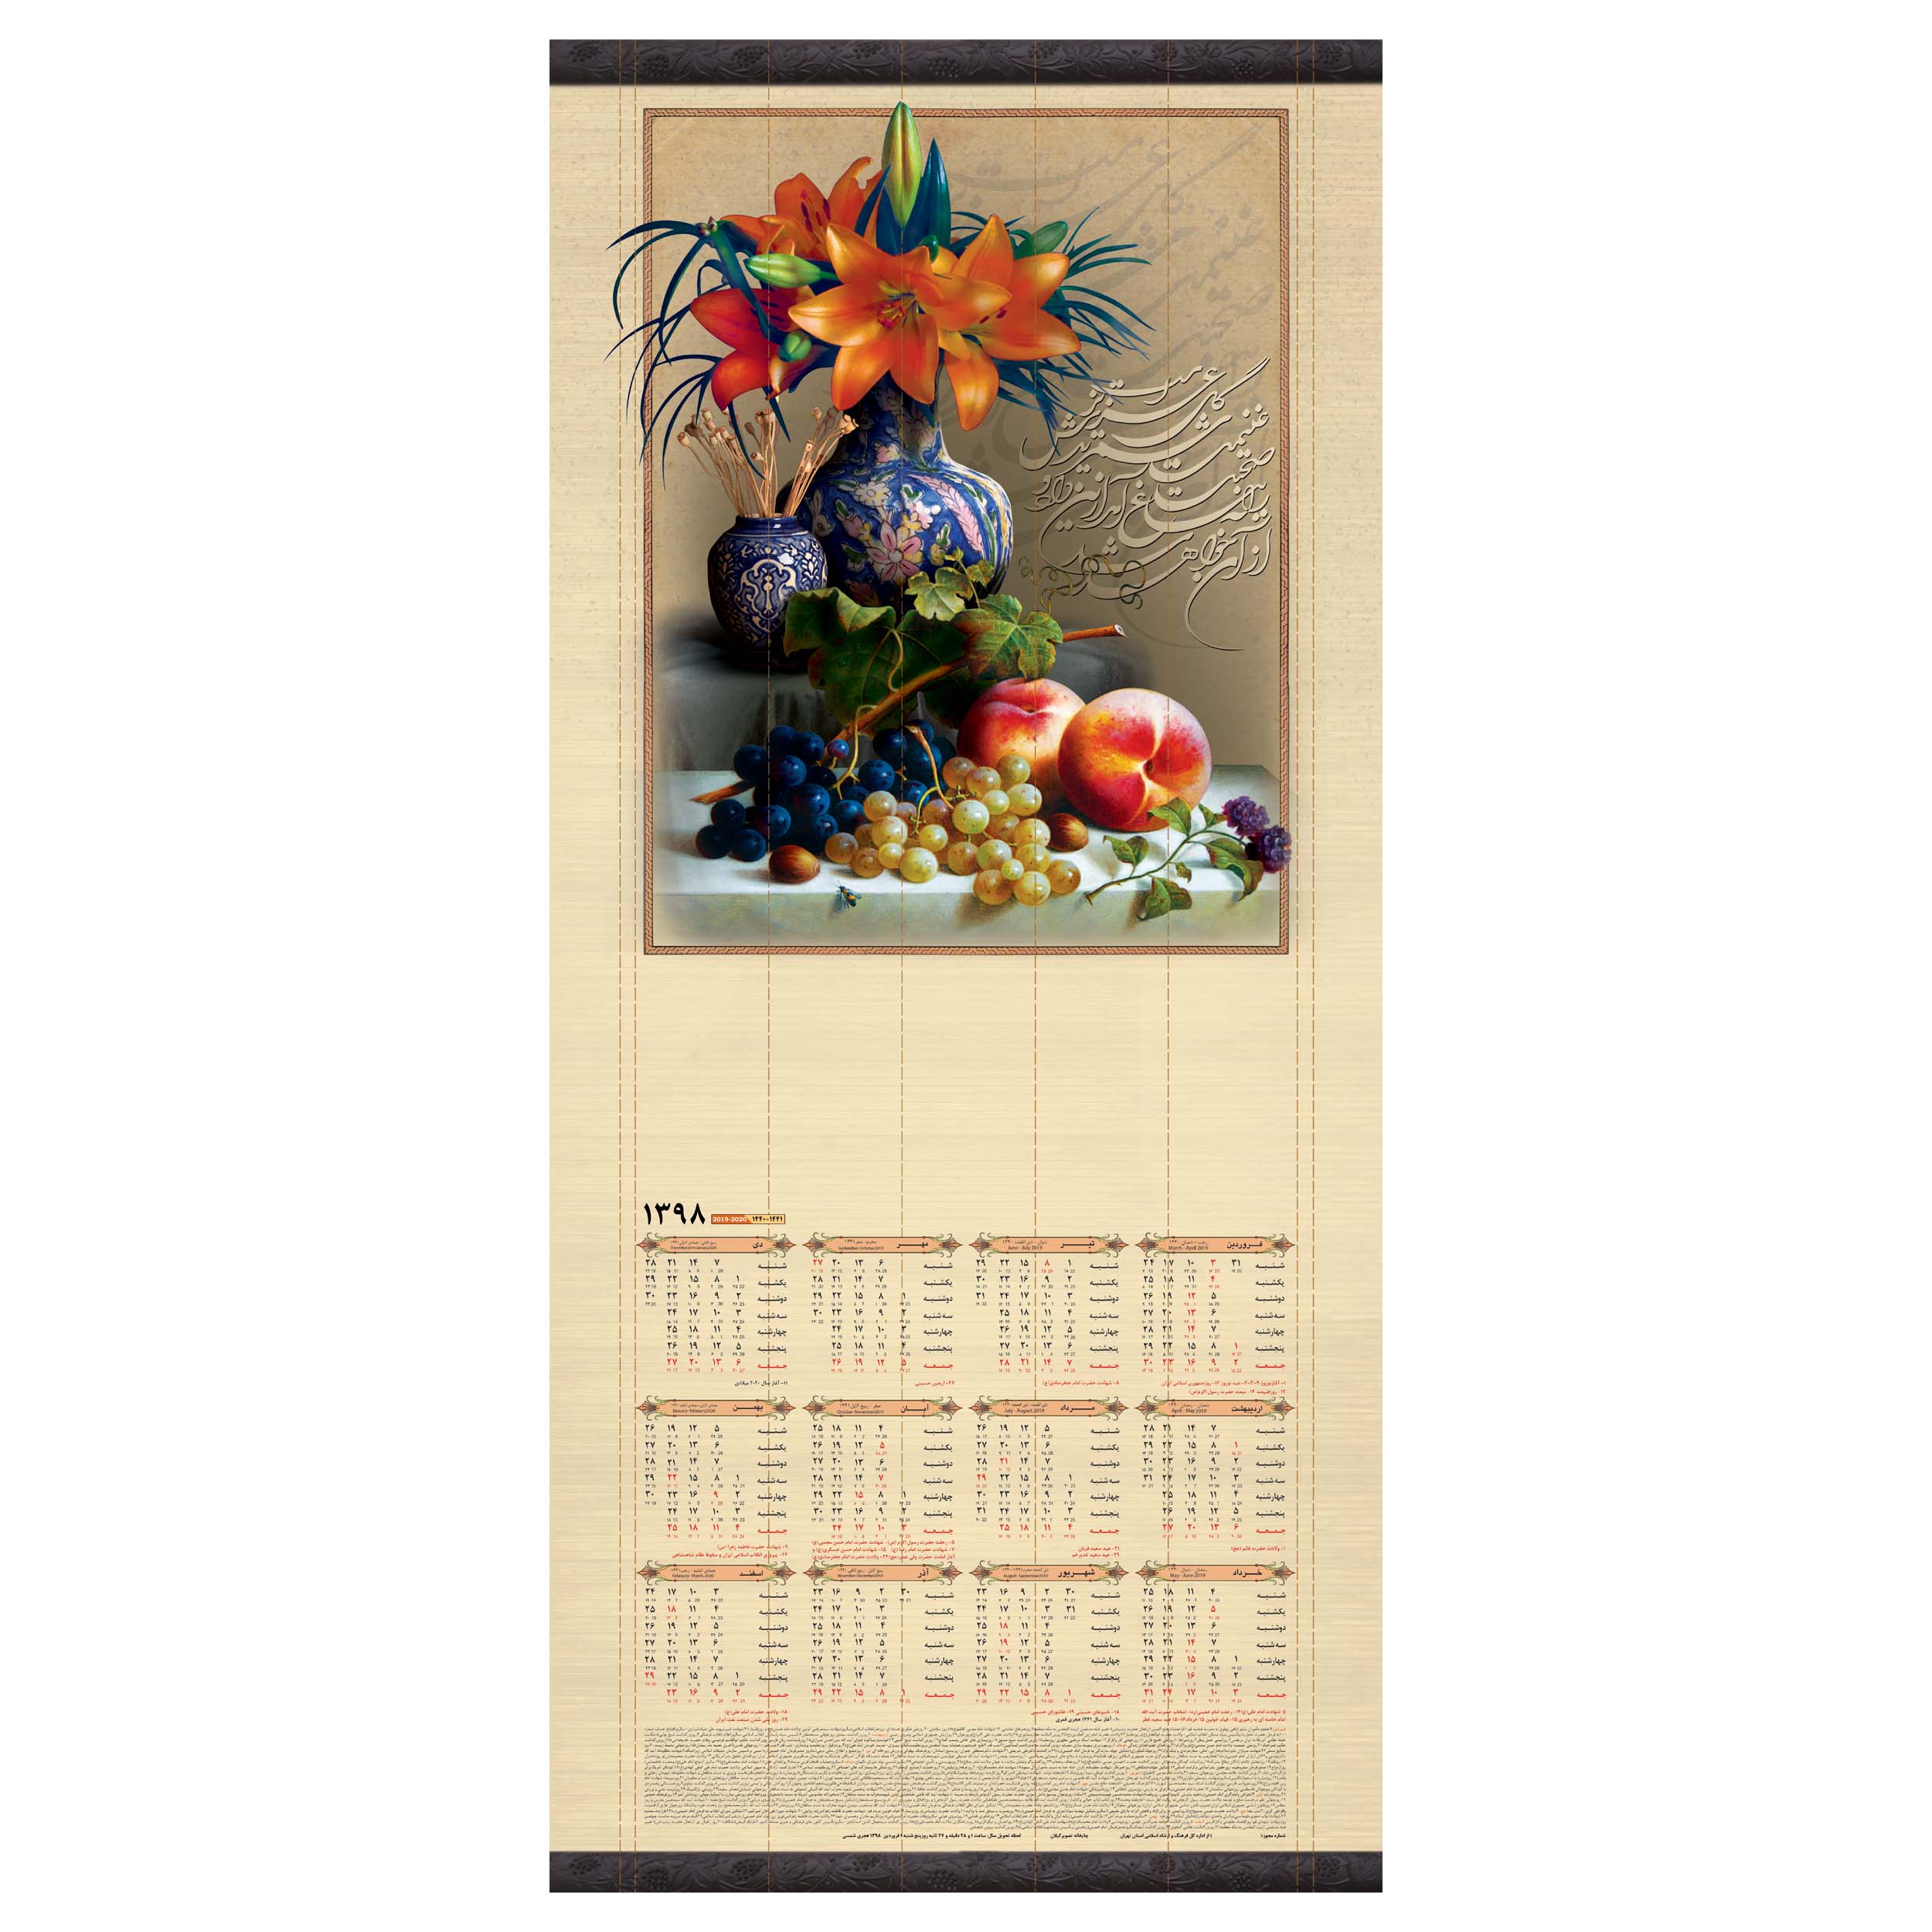 تقویم دیواری 1398 طرح گل و میوه بسته 50 عددی